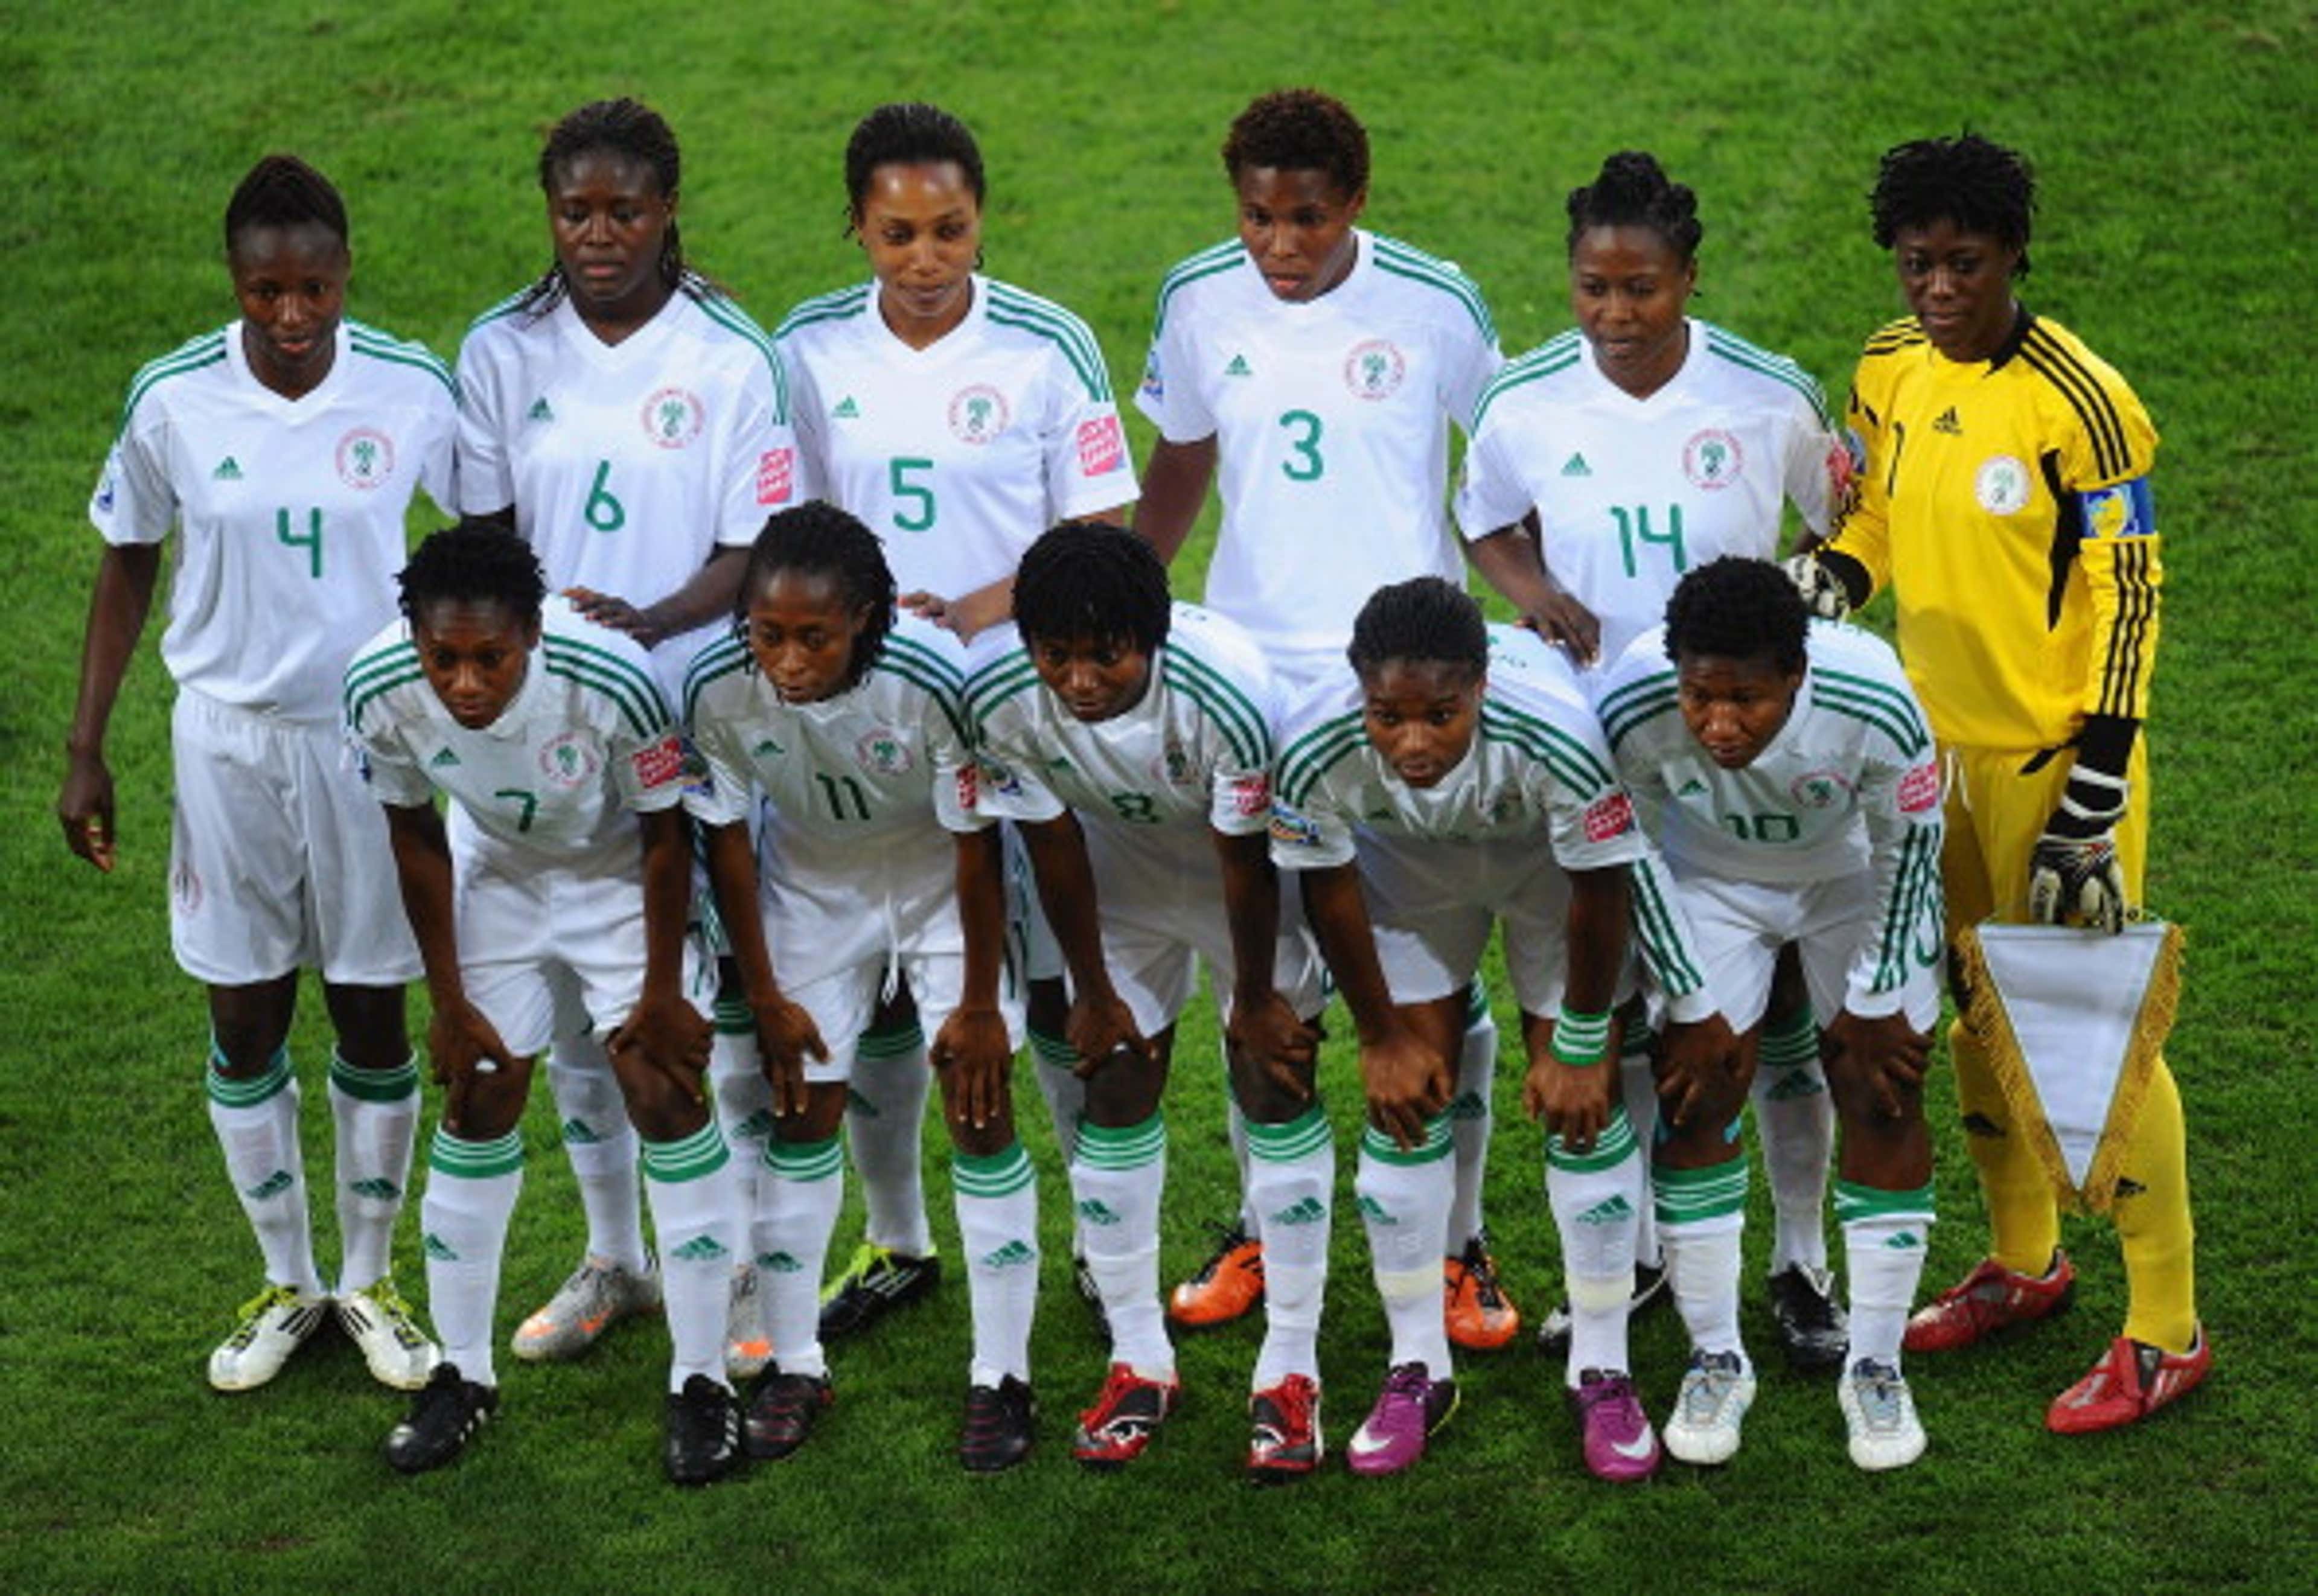 Nigeria Vs Mali: WAFU Women's Cup (2 - 0) Full Time - Sports (2